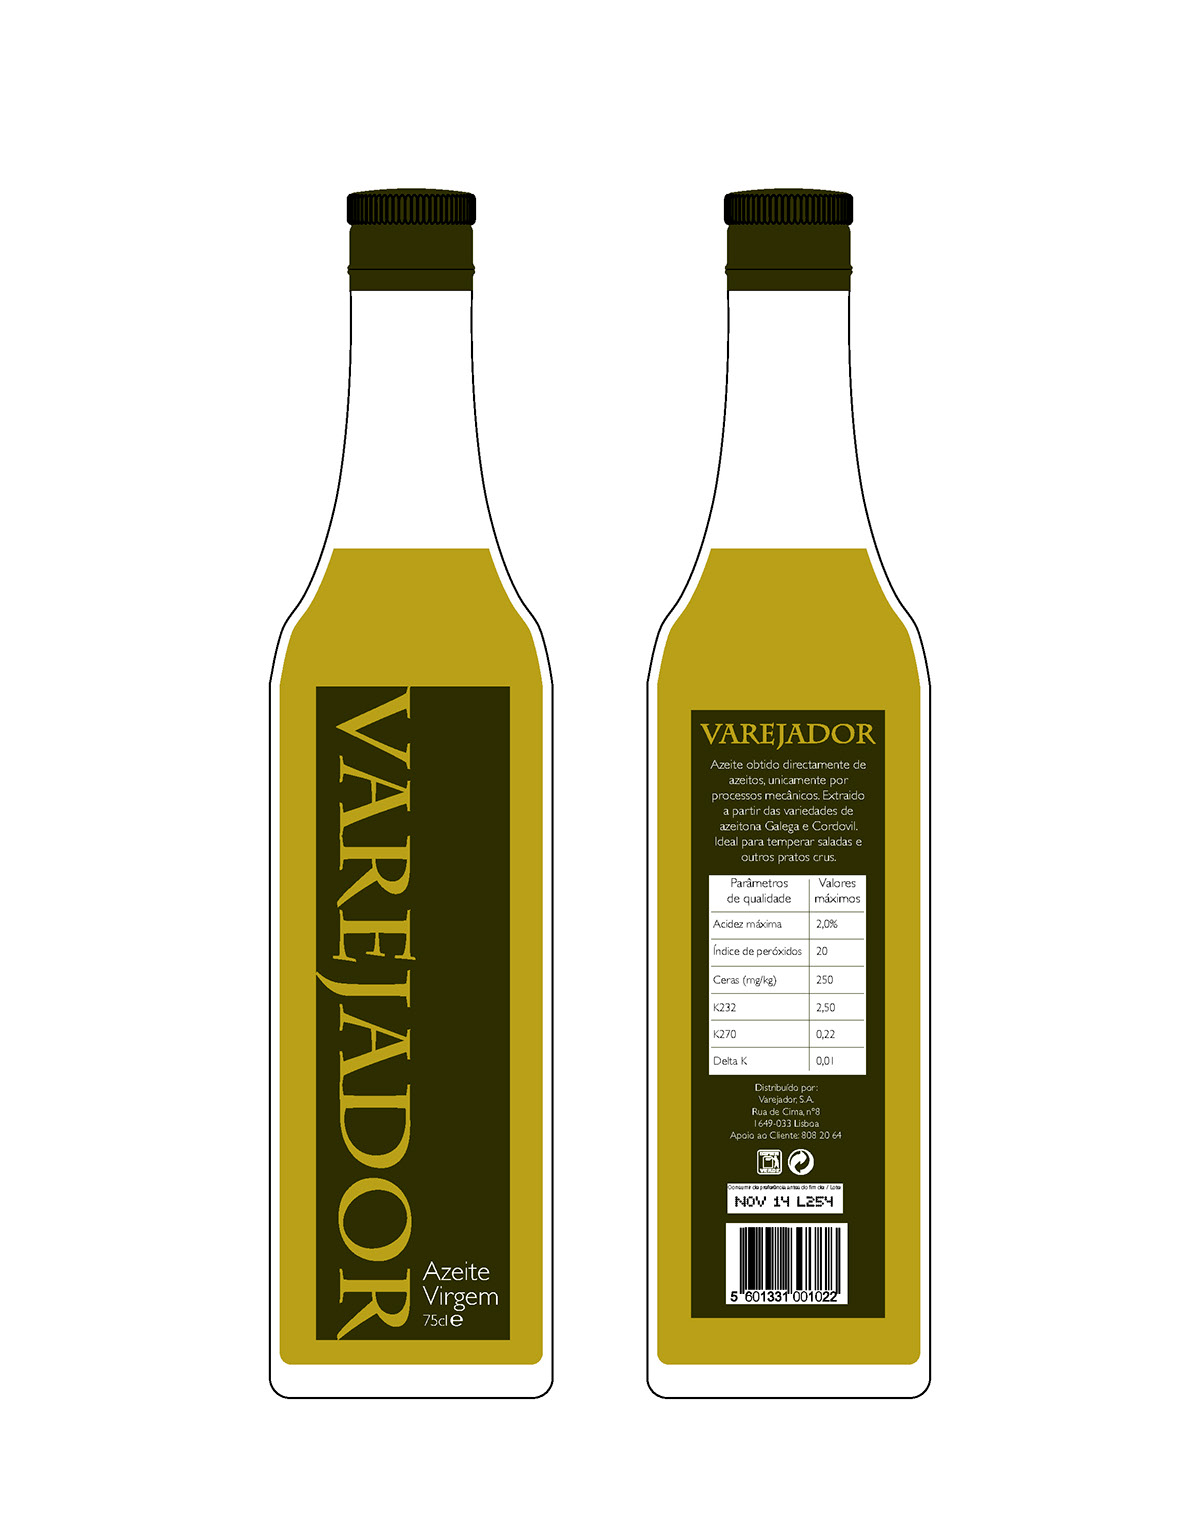 Olive Oil AZEITE embalagem